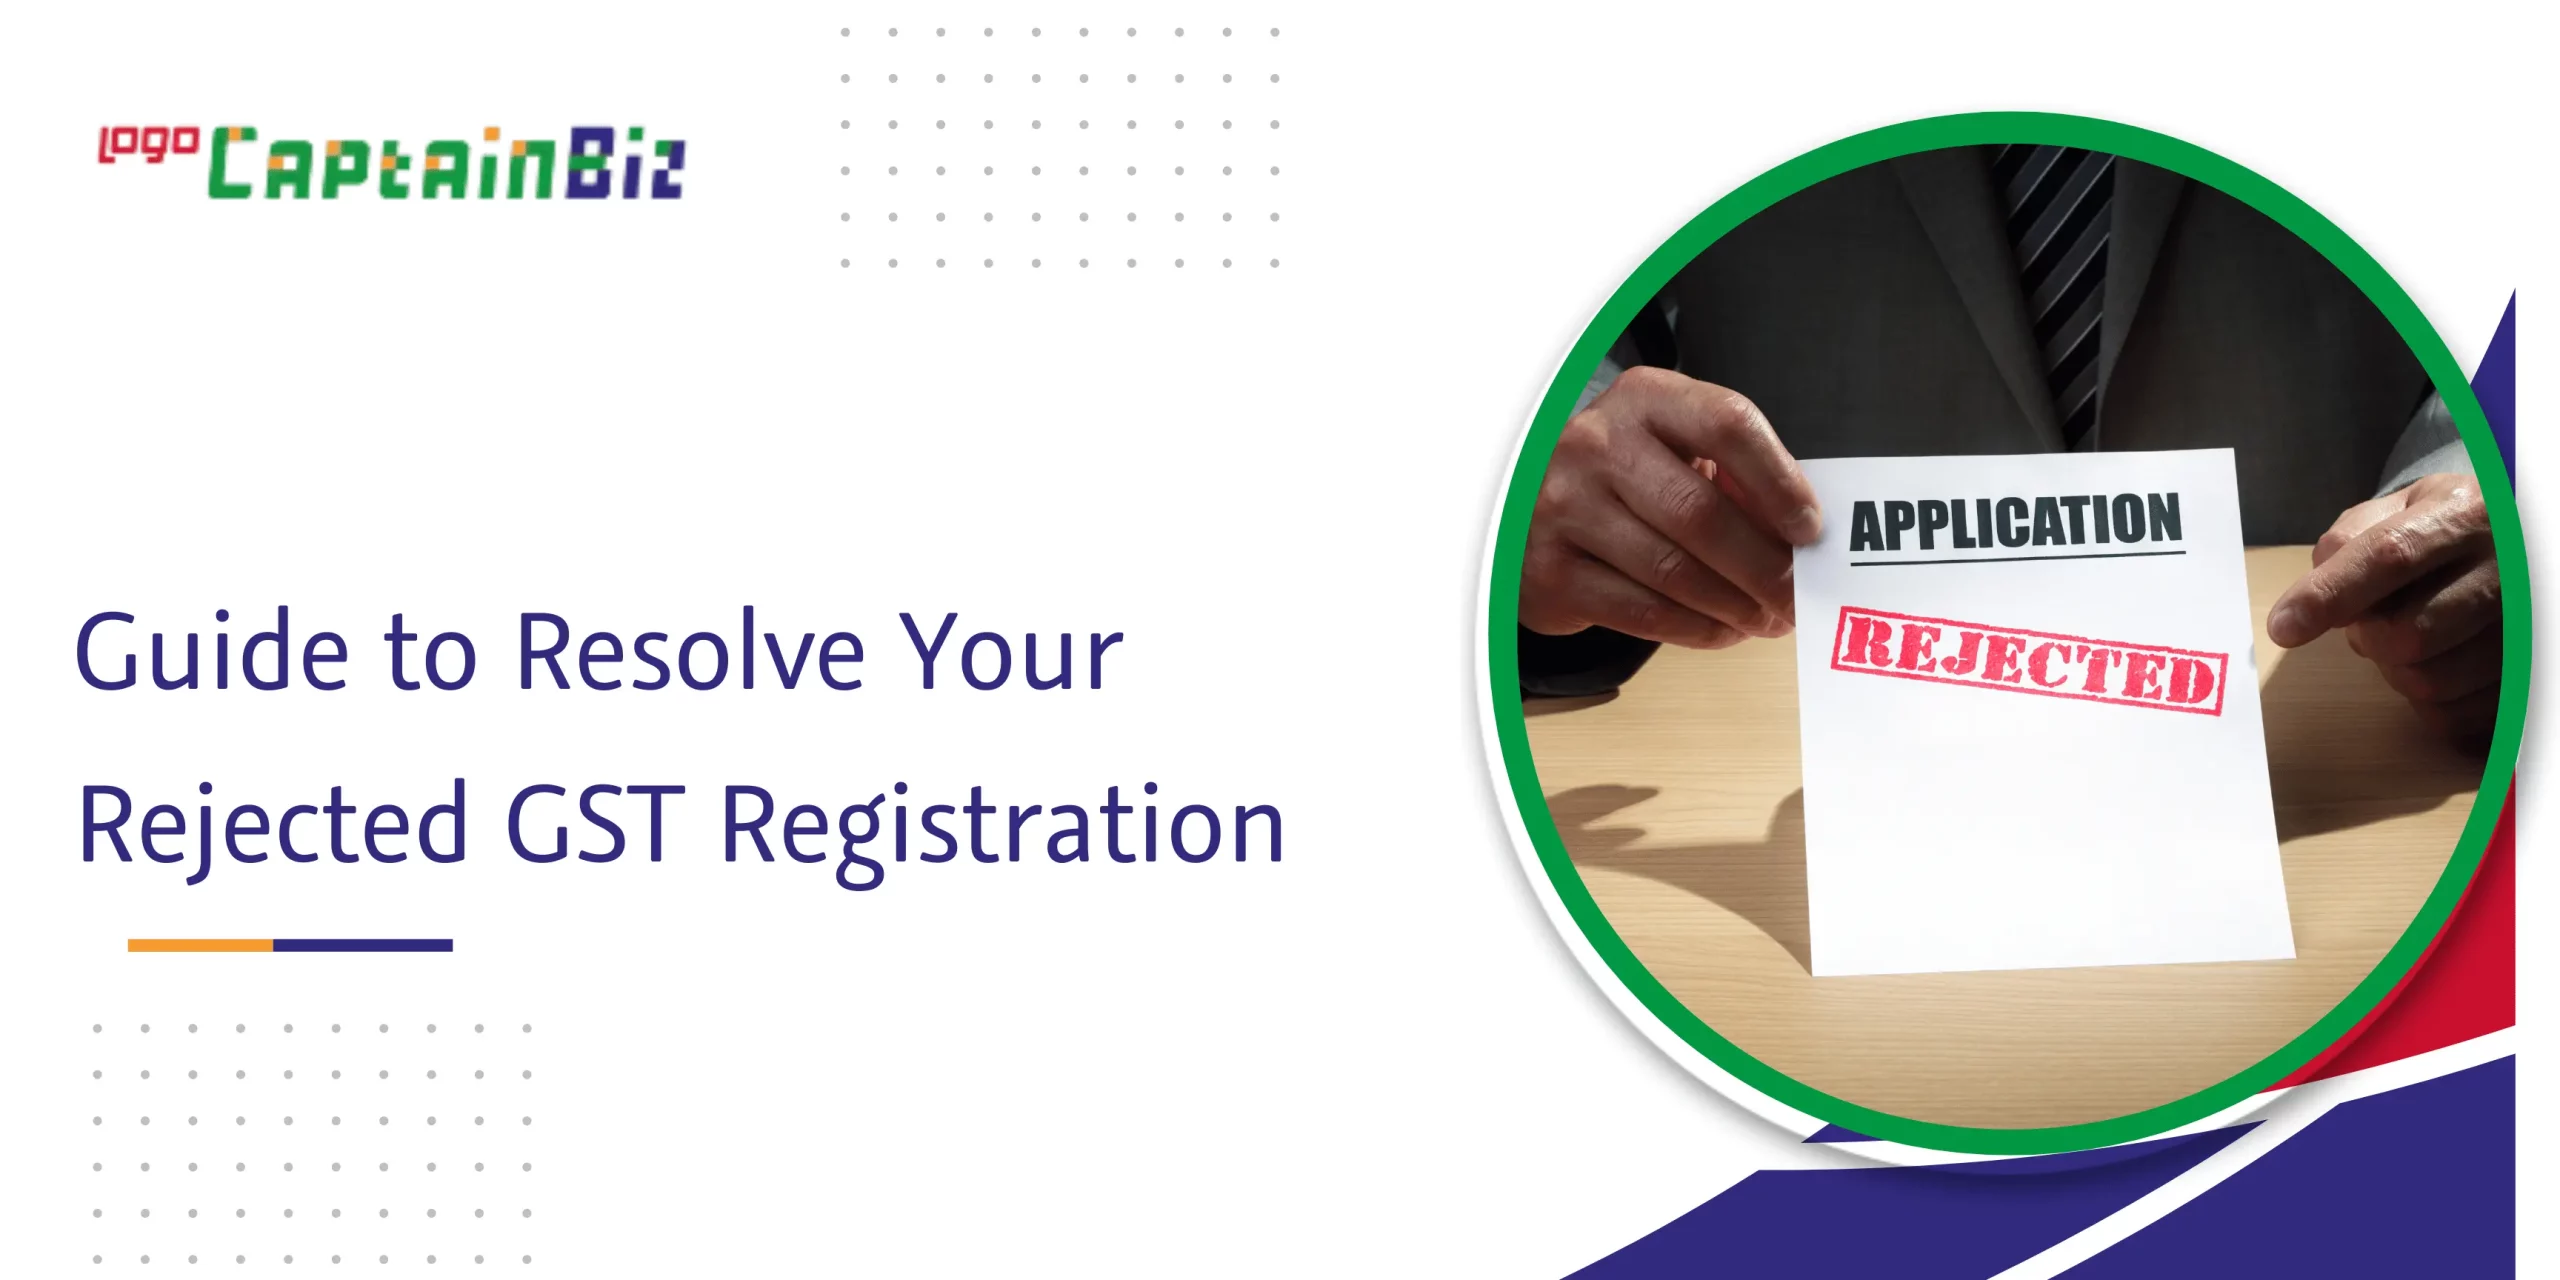 CaptainBiz: guide to resolve your rejected gst registration